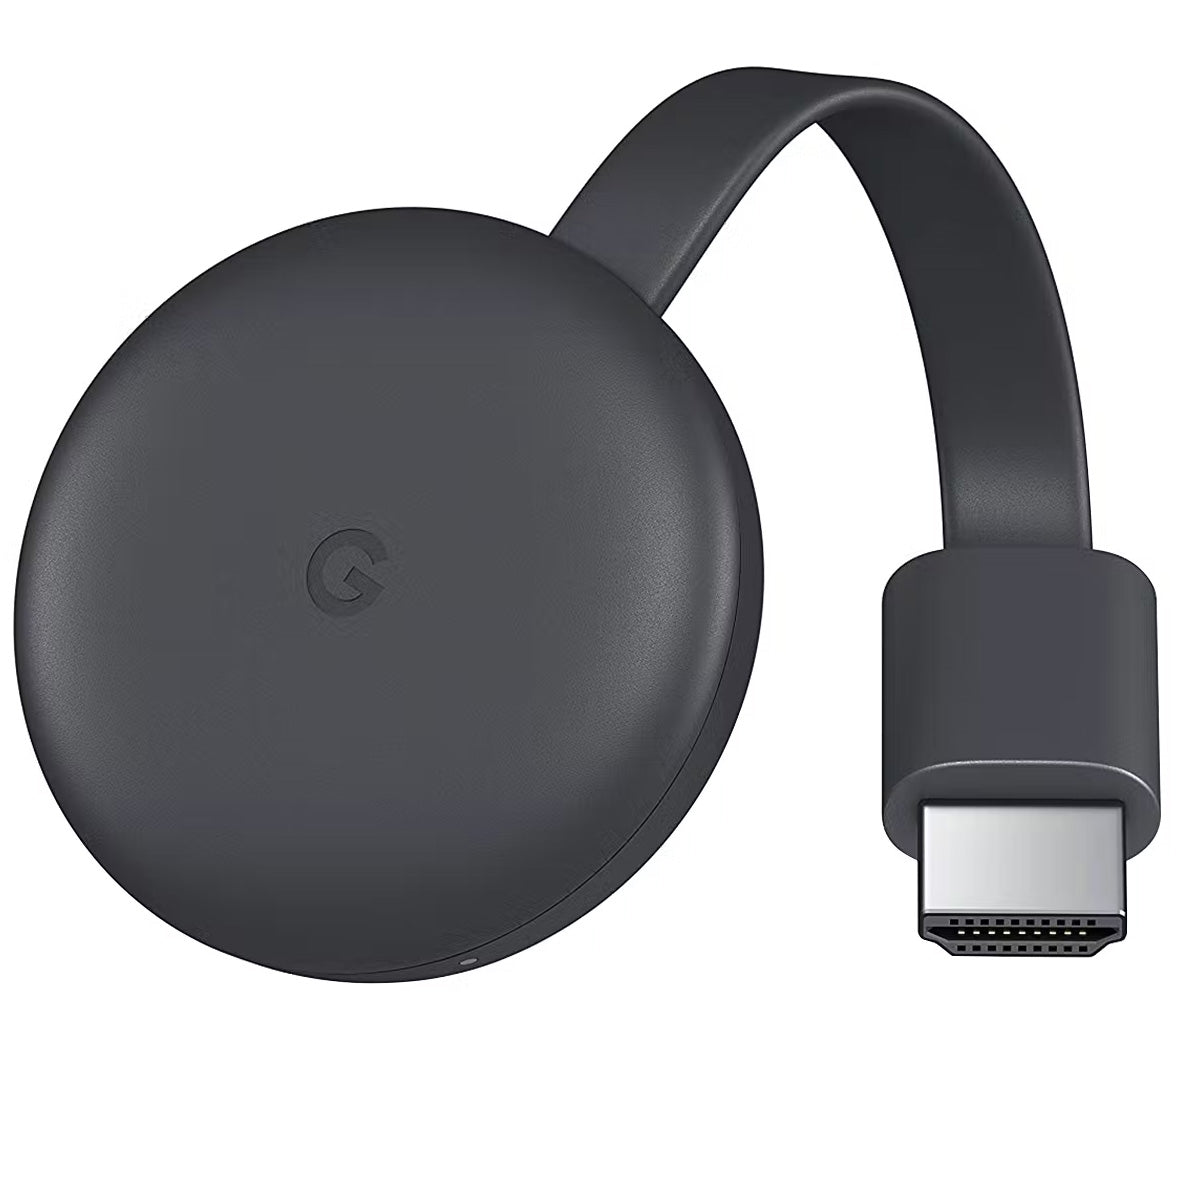 Google Chromecast Third Generation (IE Version) - Charcoal